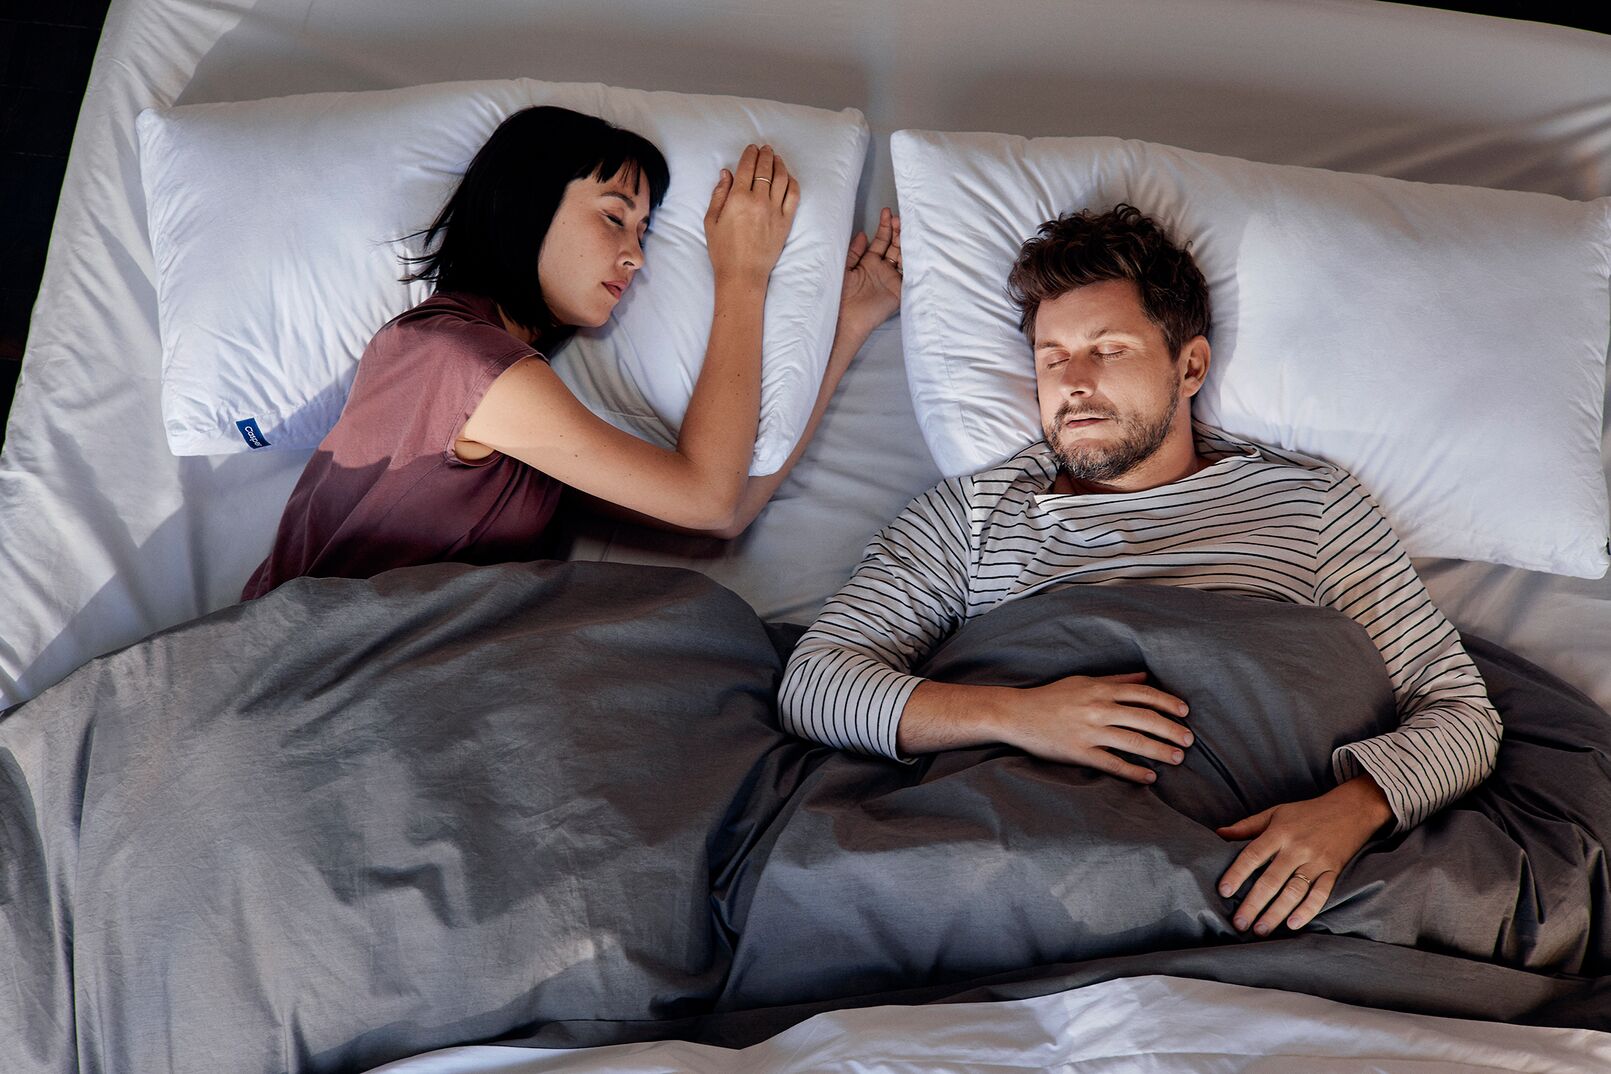 Two partners sleep next to one another on Casper pillows and a Casper mattress.